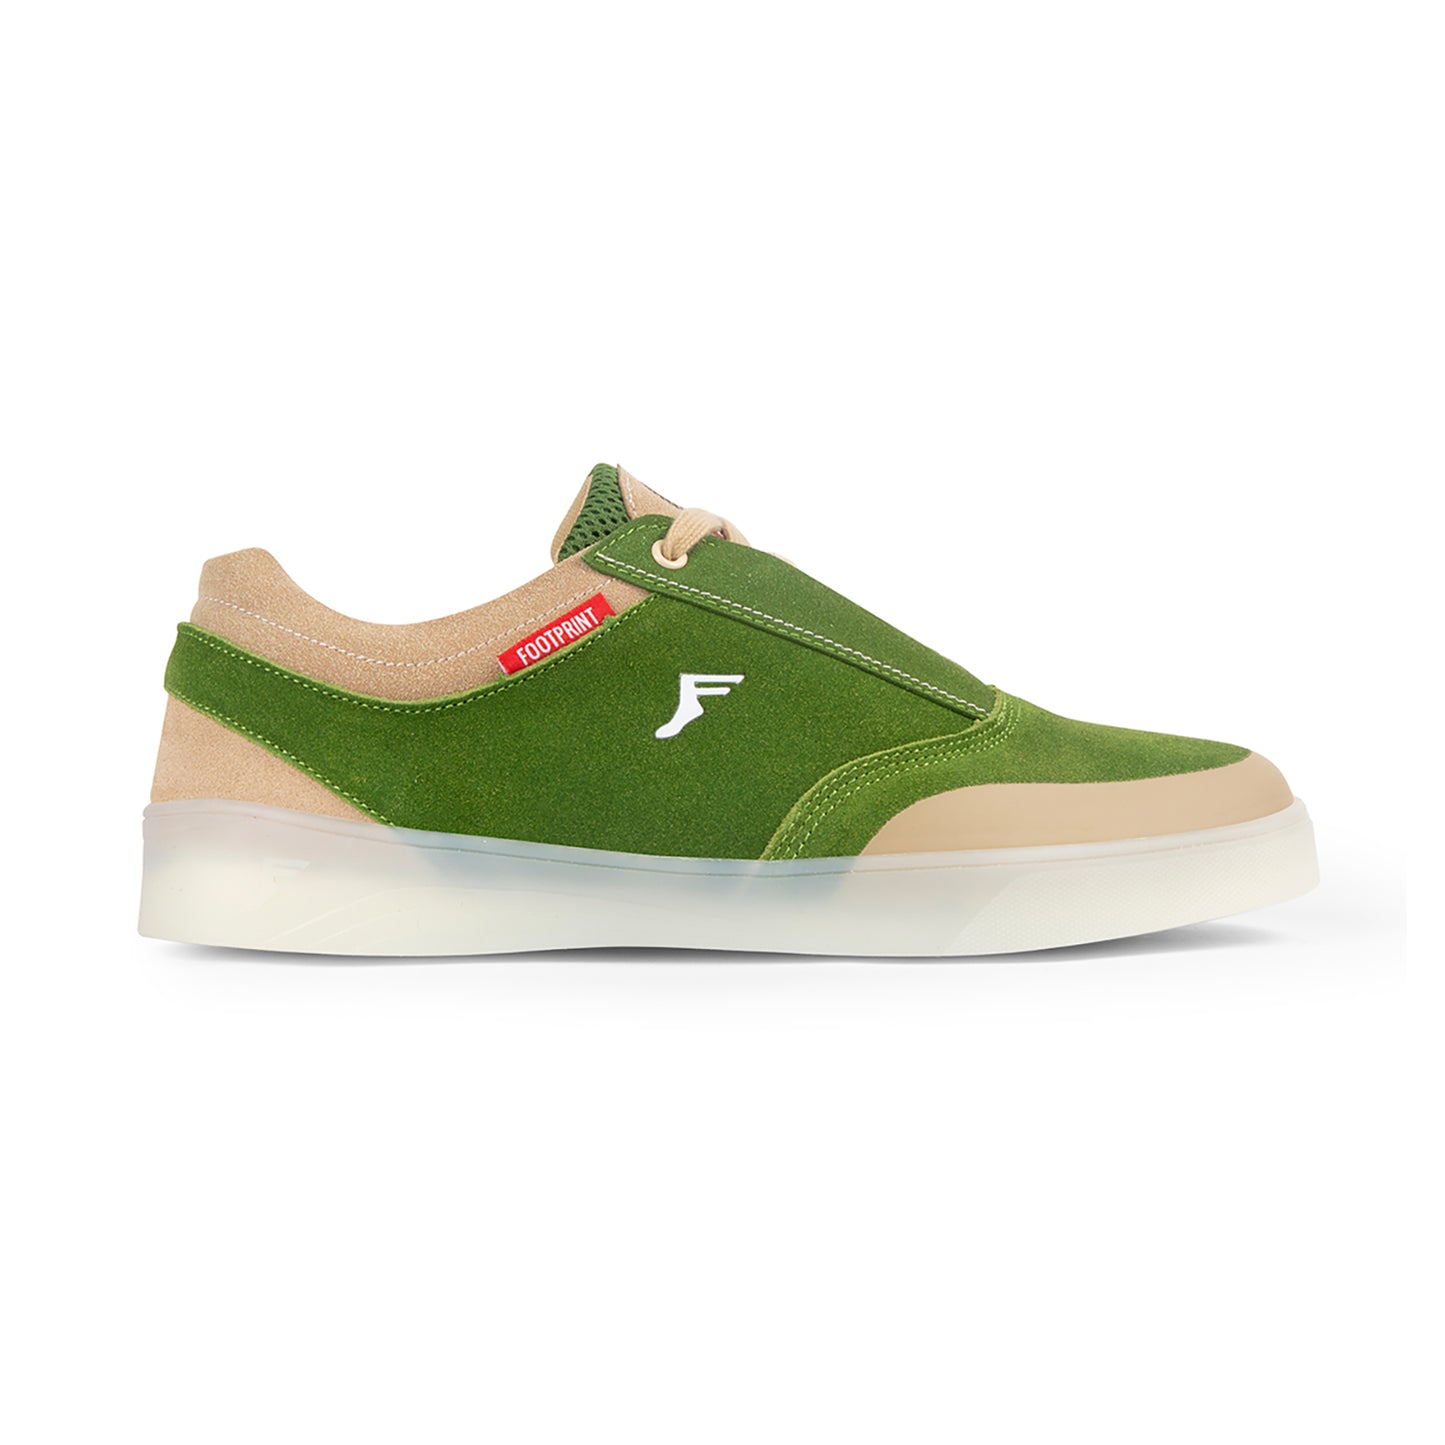 Fp footwear green shoes 